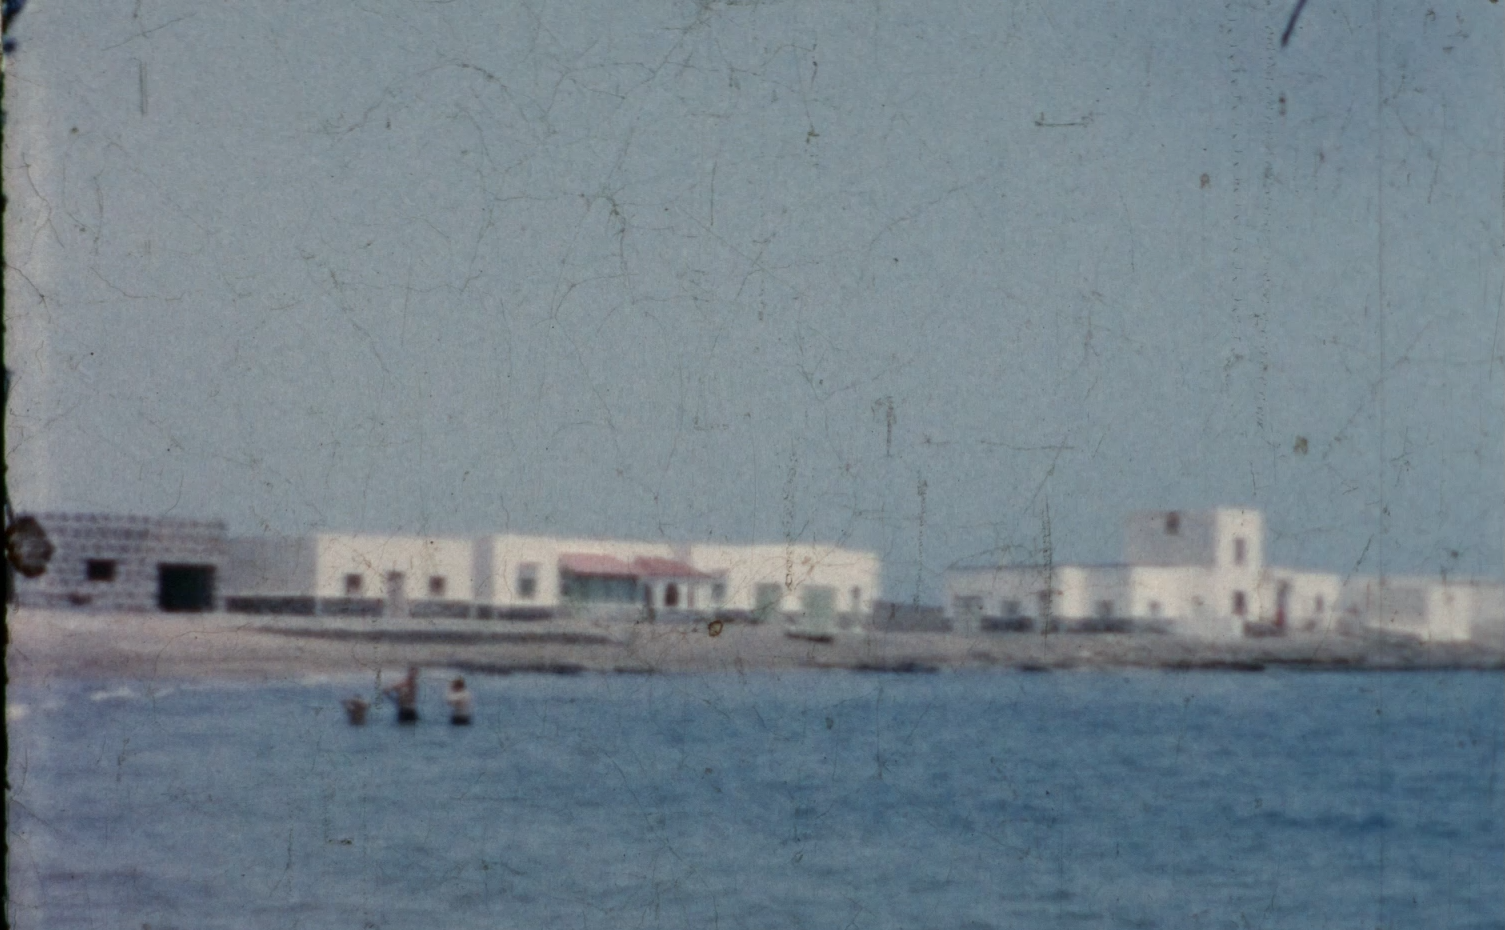 Playa Honda (1963)